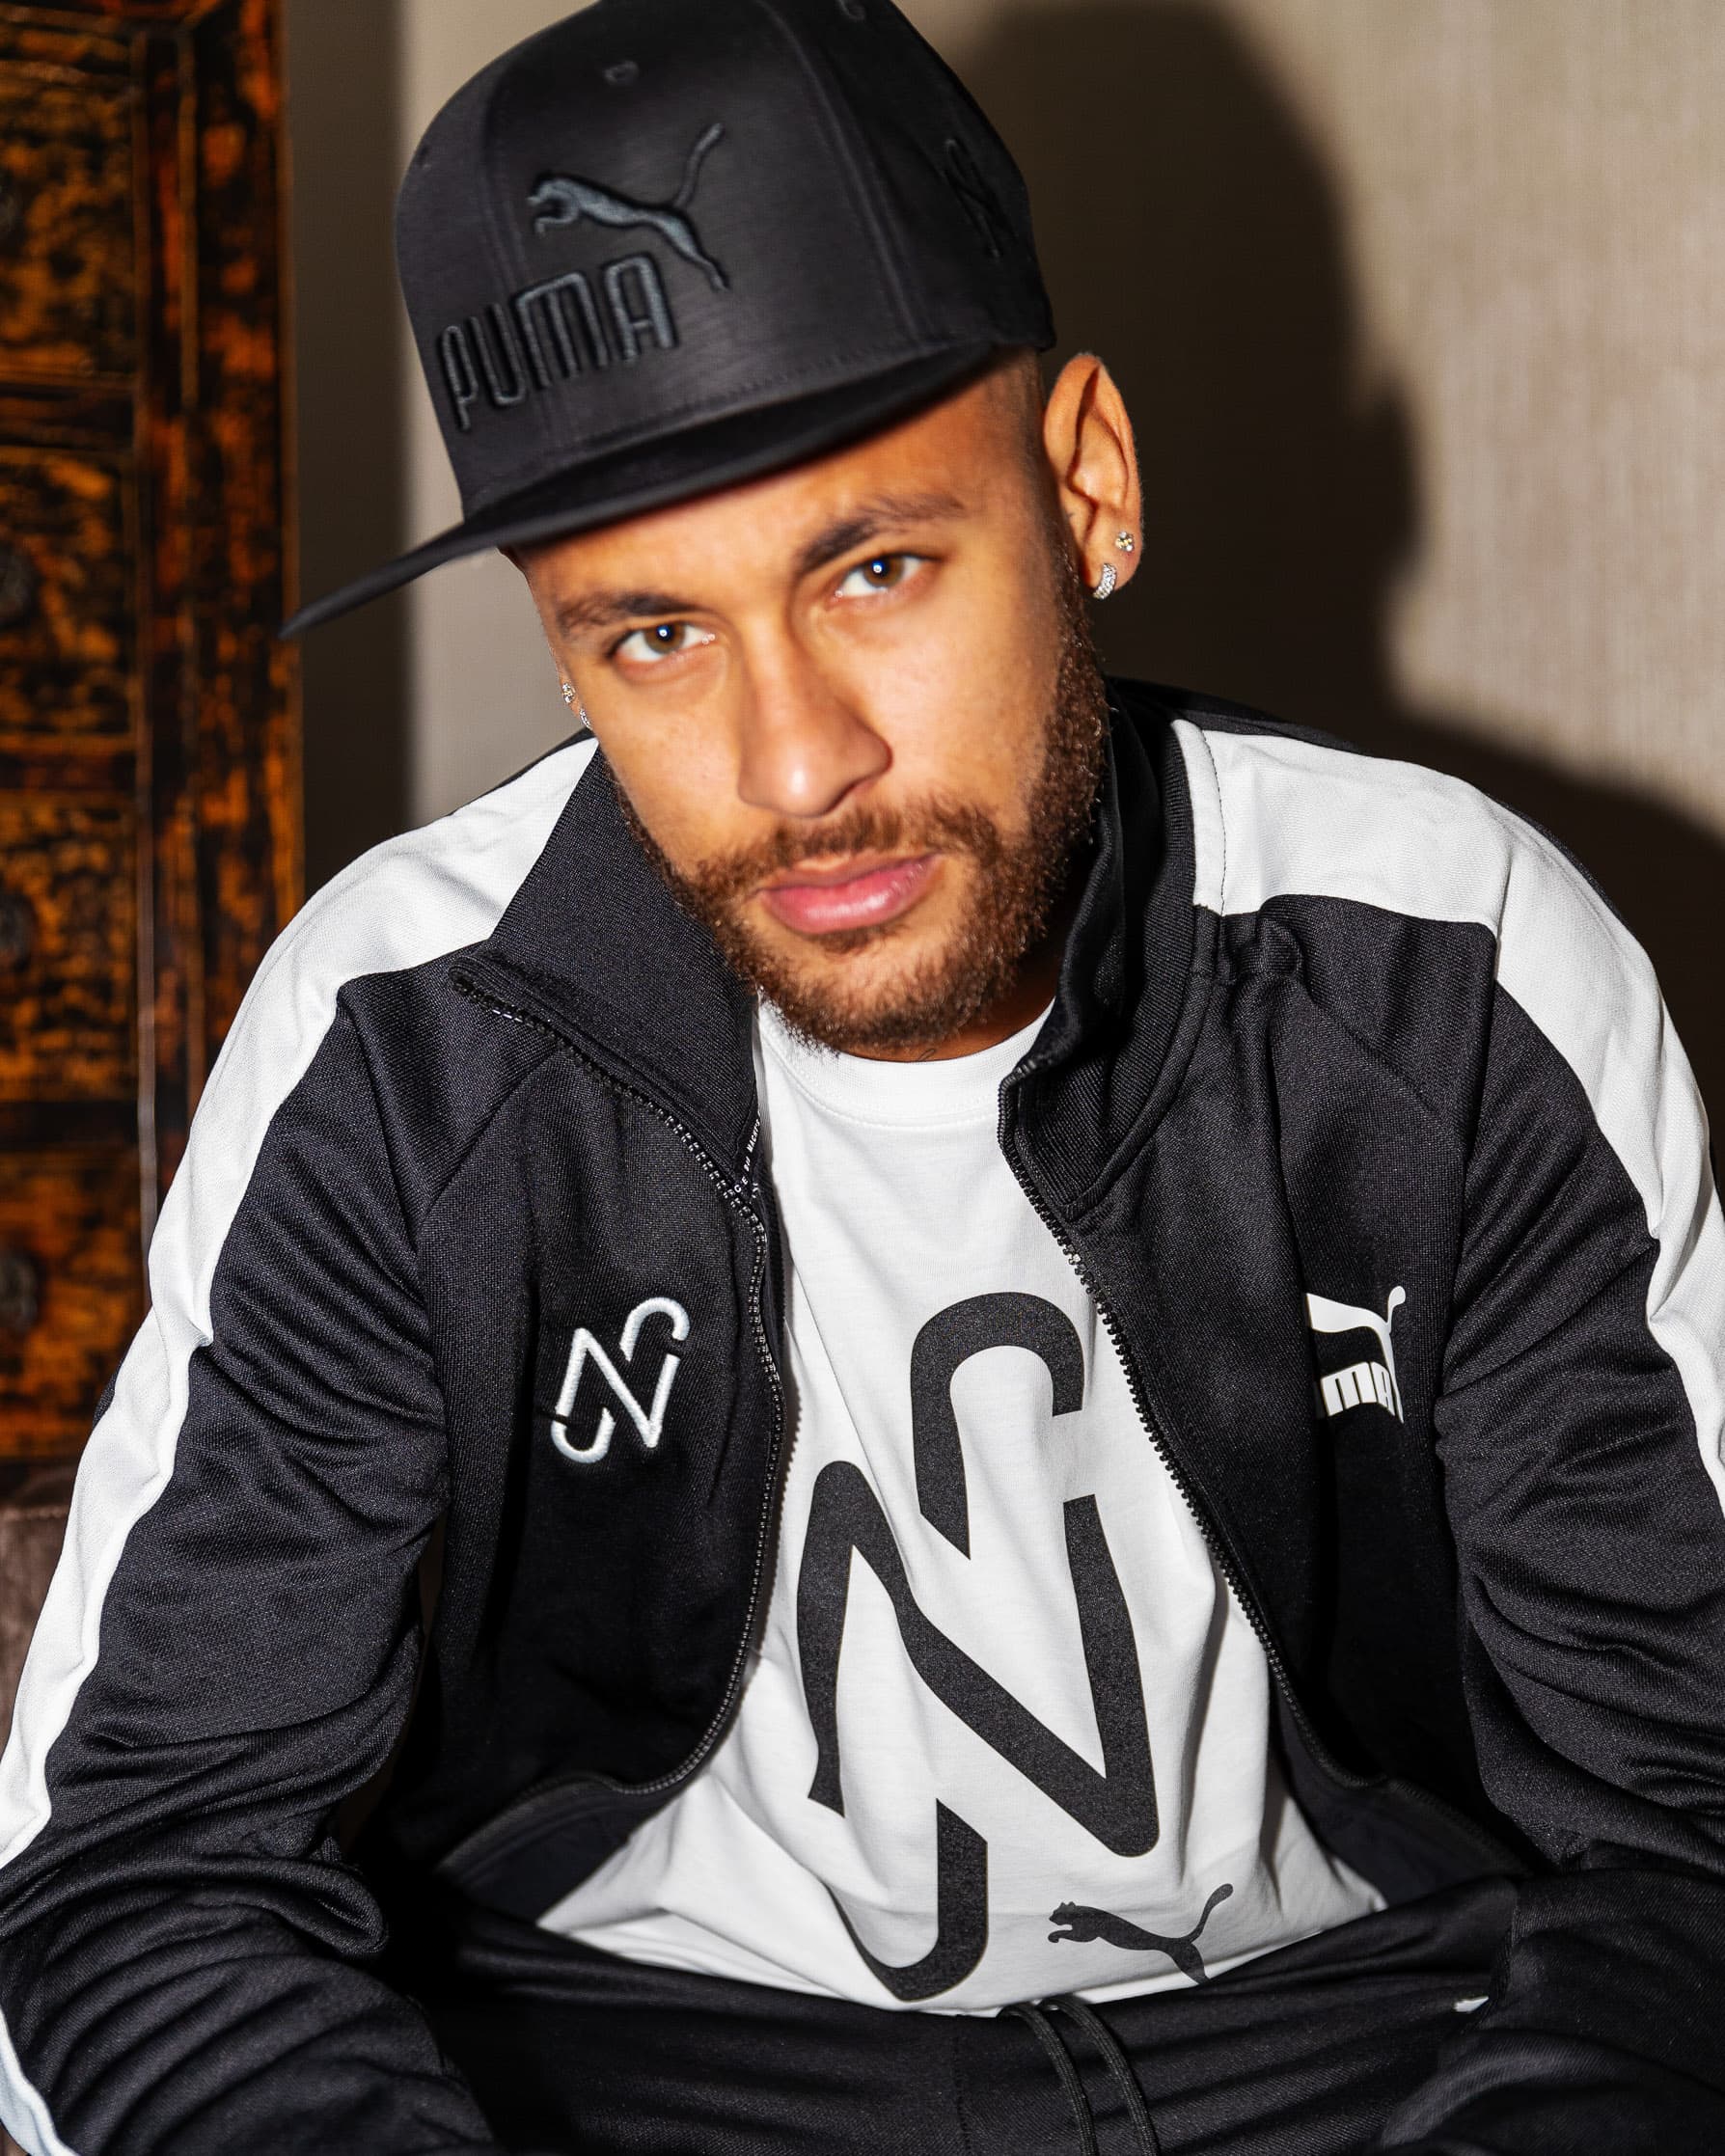 Neymar jr signs to puma